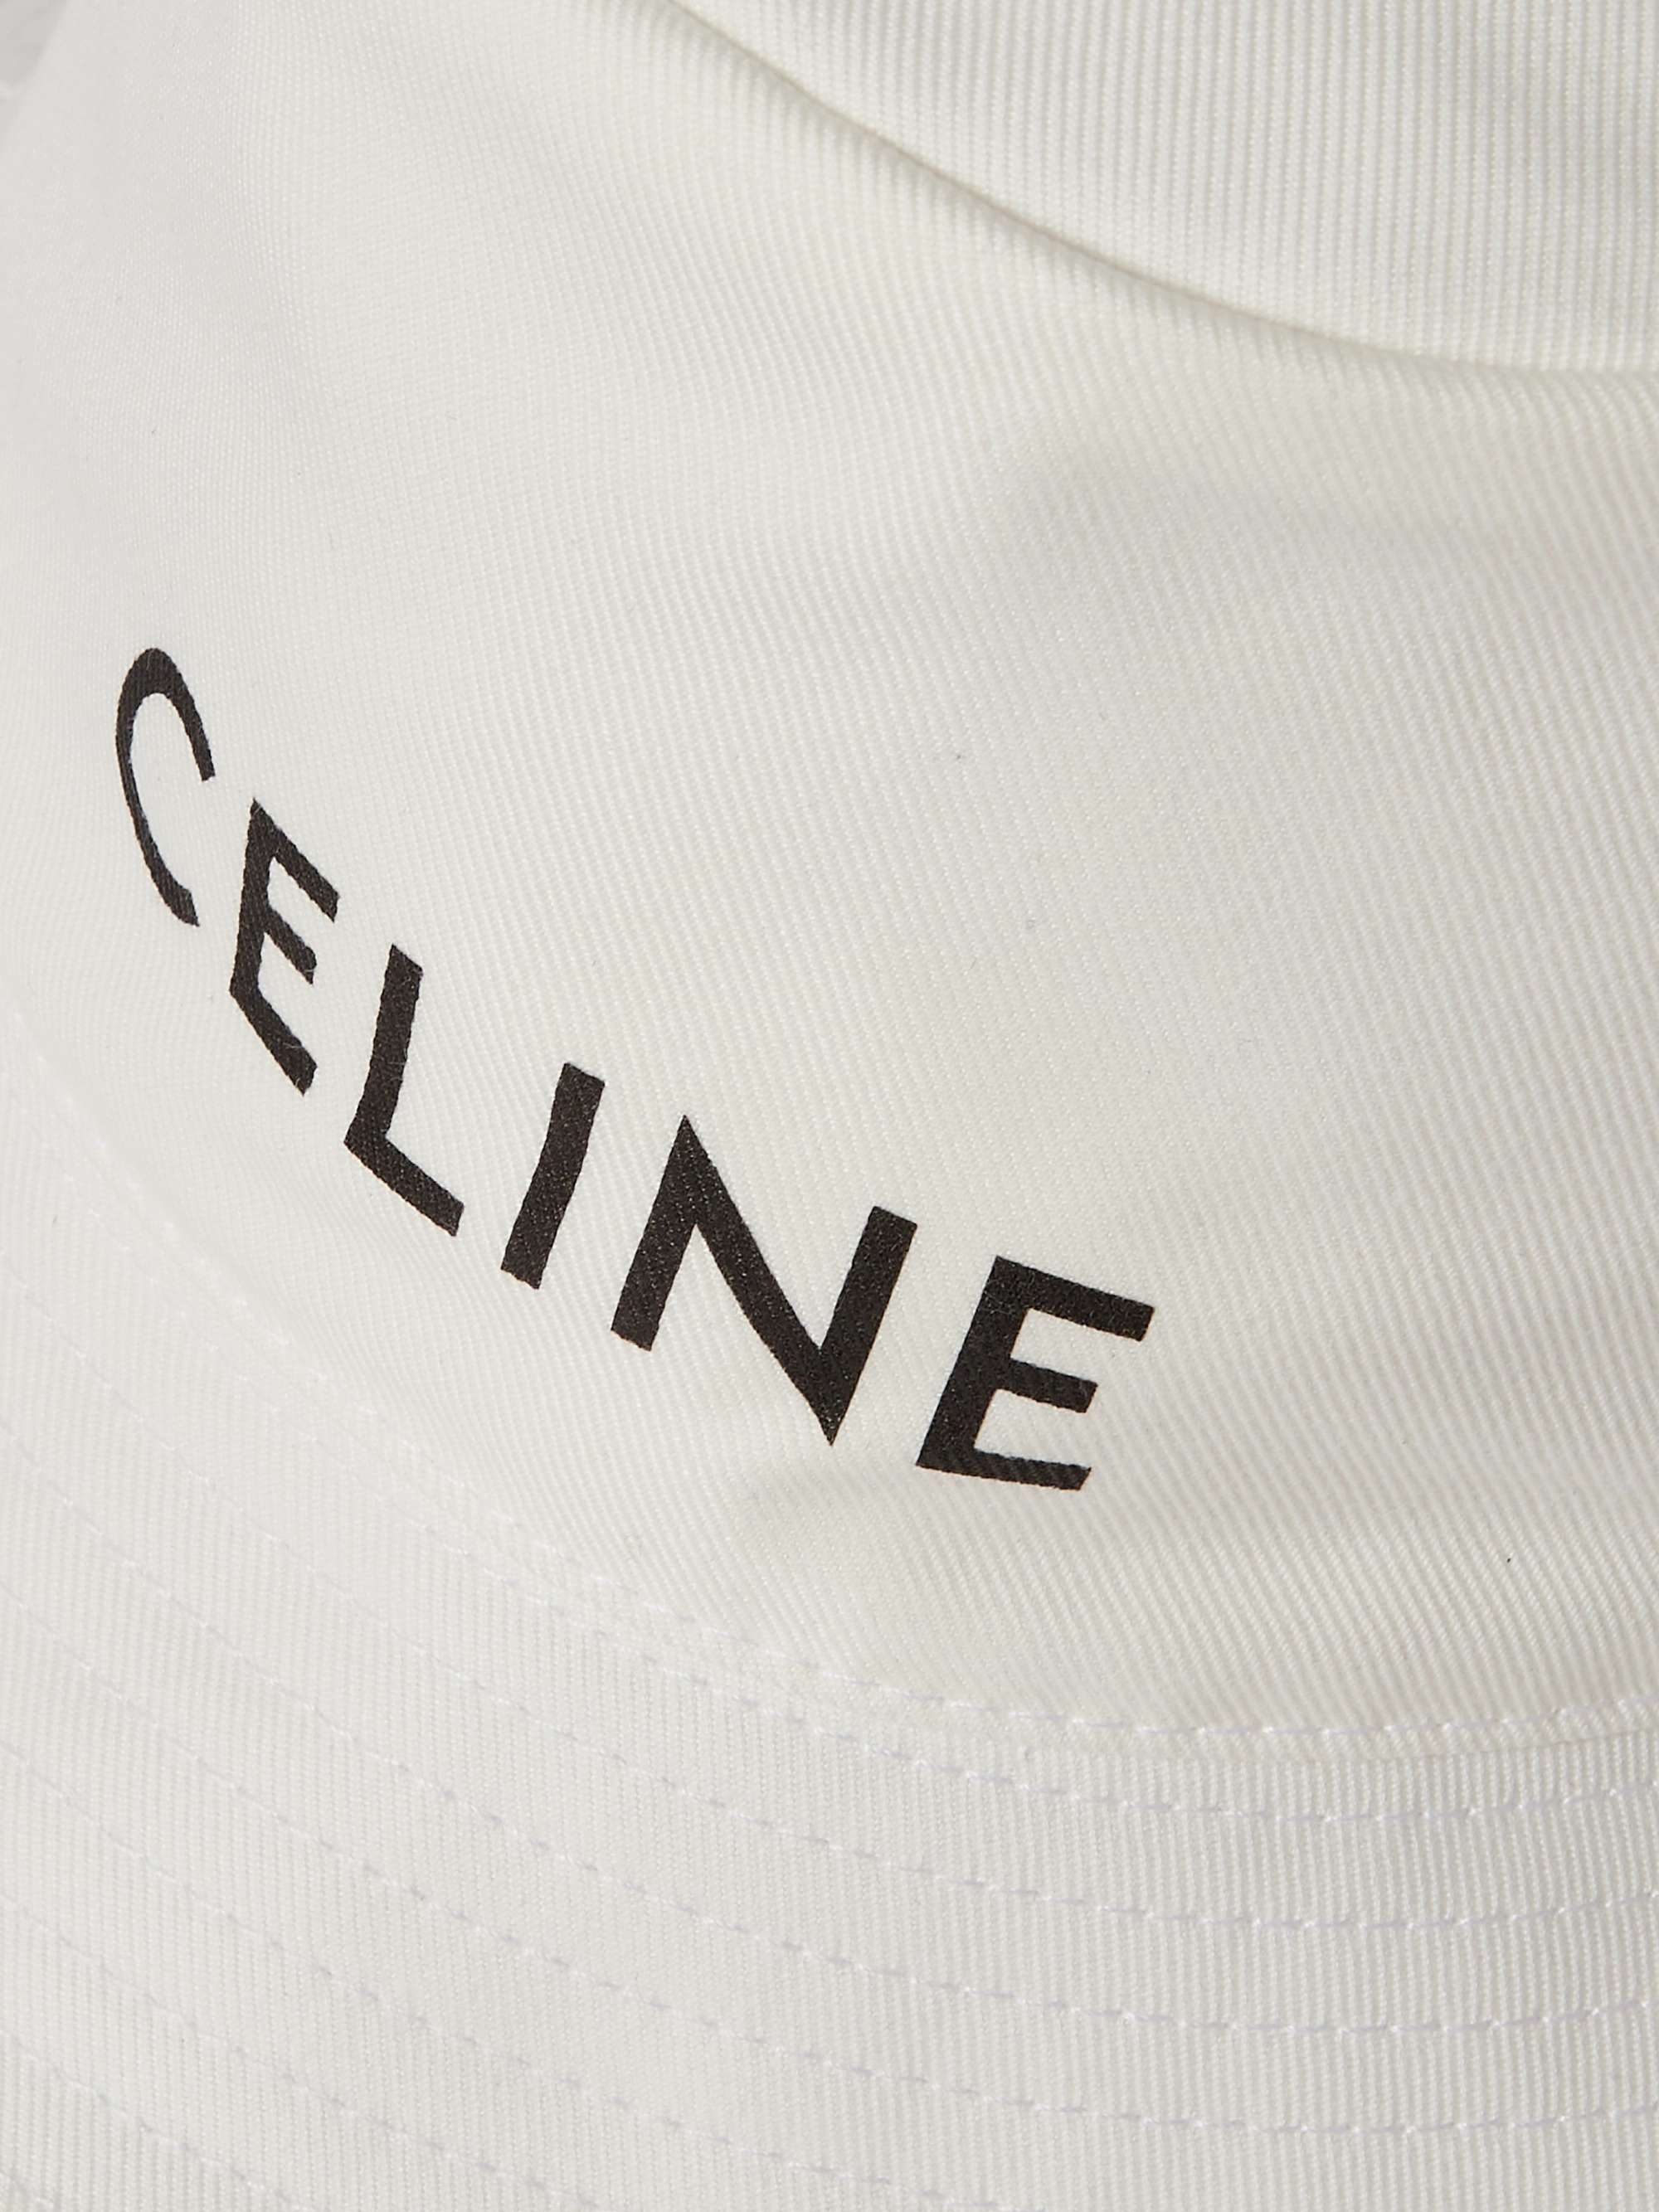 CELINE HOMME Logo-Print Cotton-Gabardine Bucket Hat